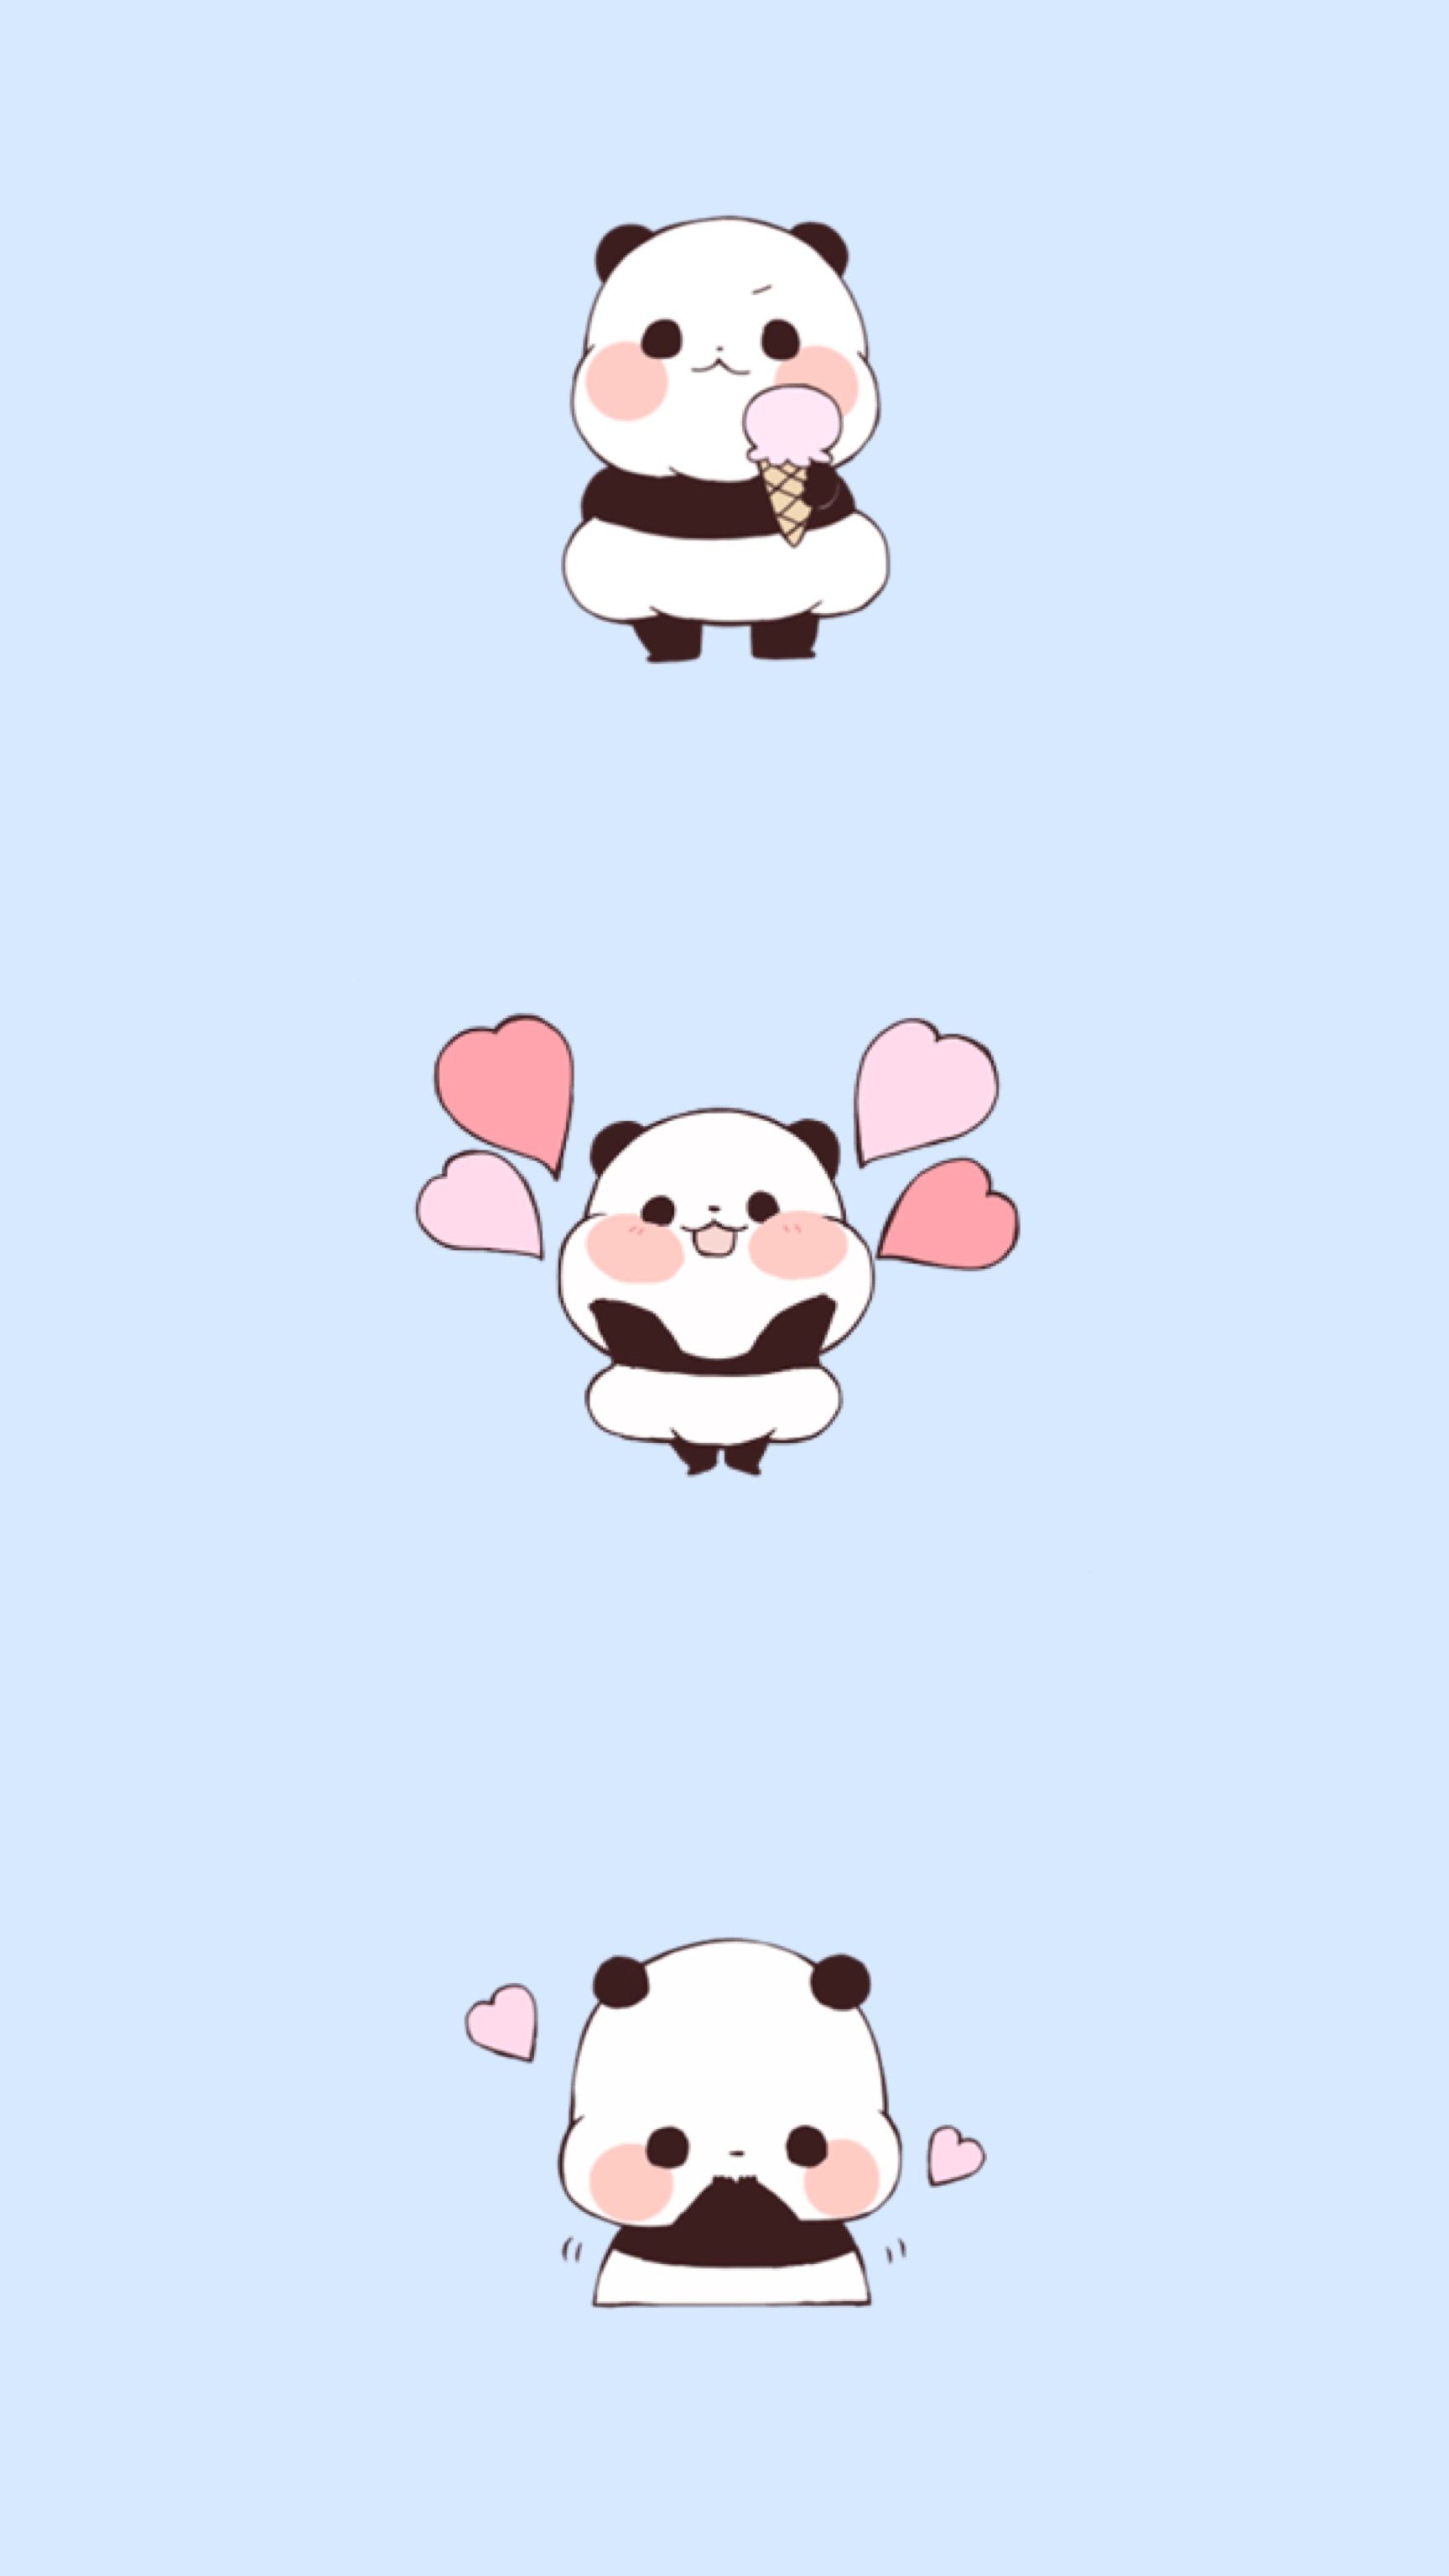 Adorable Cute Cartoon Wallpaper Home Screen Panda